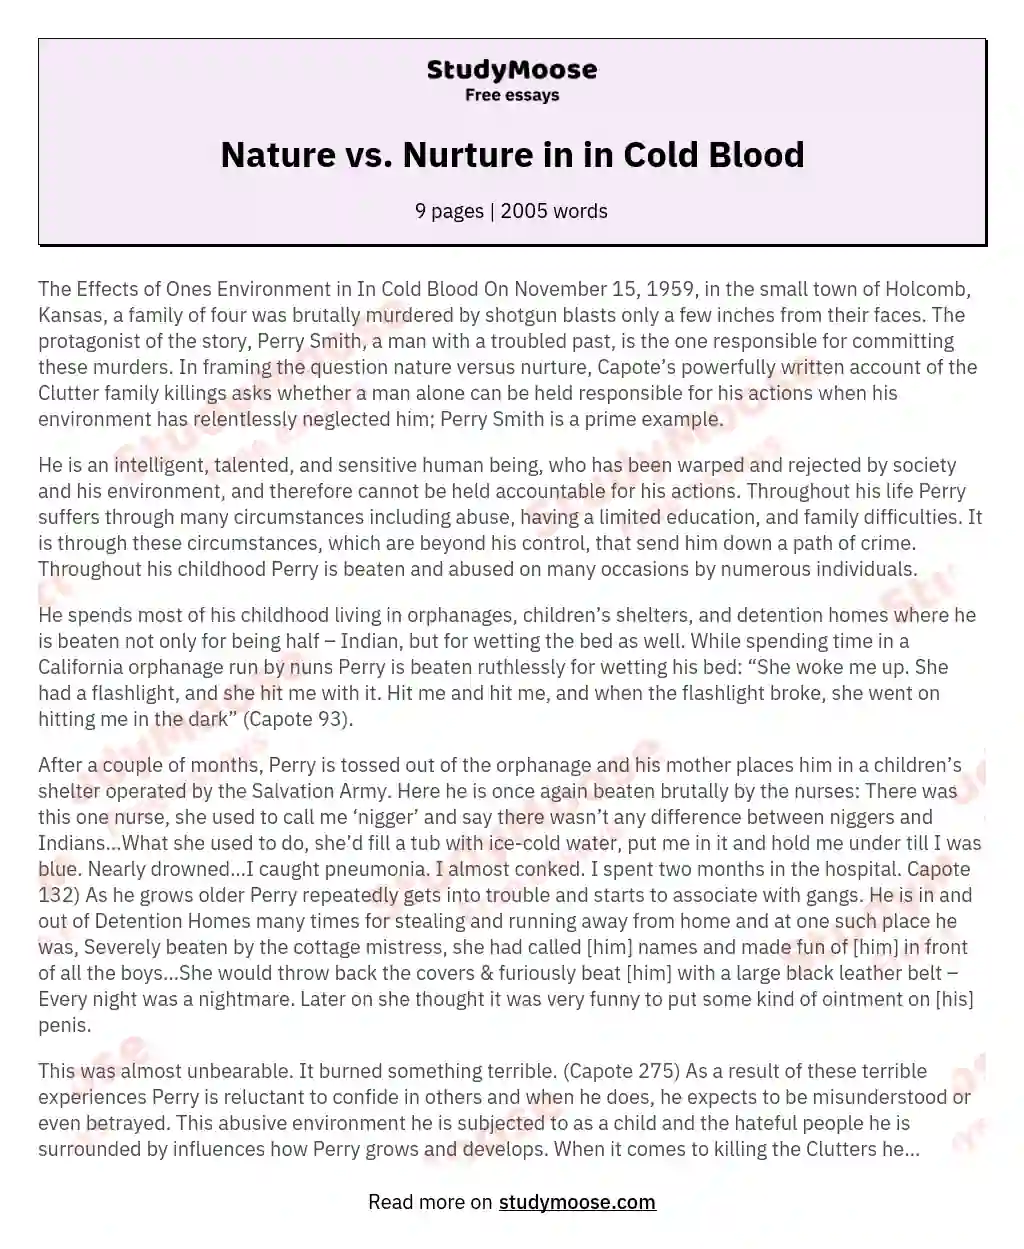 Nature vs. Nurture in in Cold Blood essay